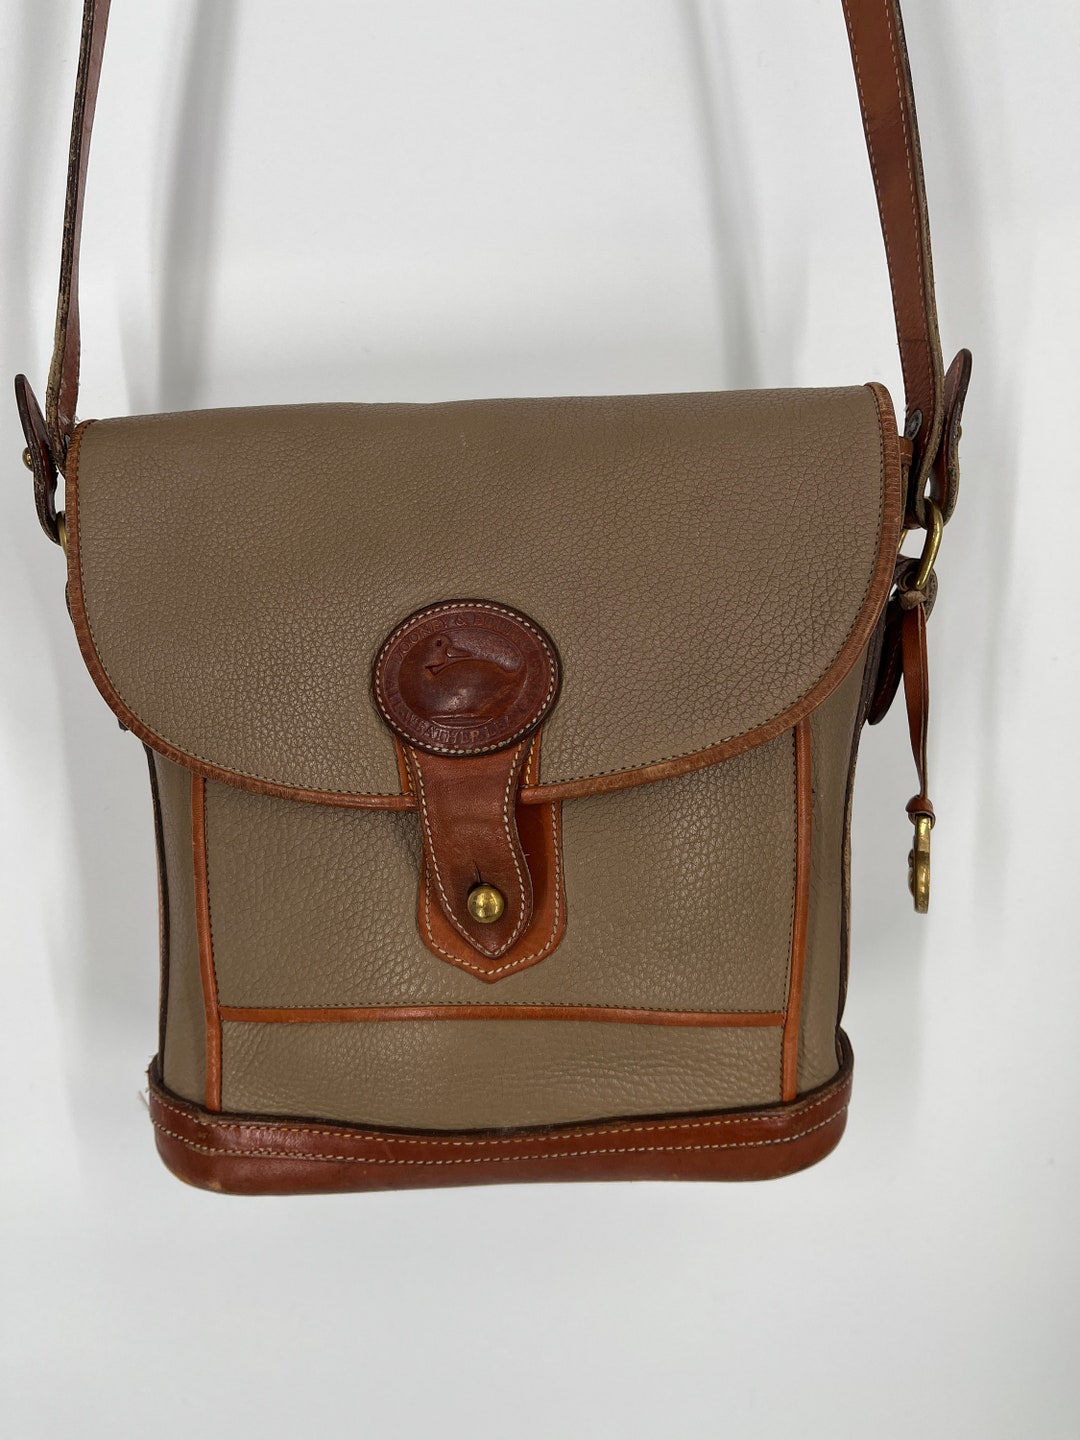 Vintage Dooney & Bourke Buckle Pebbled Leather Crossbody Bag